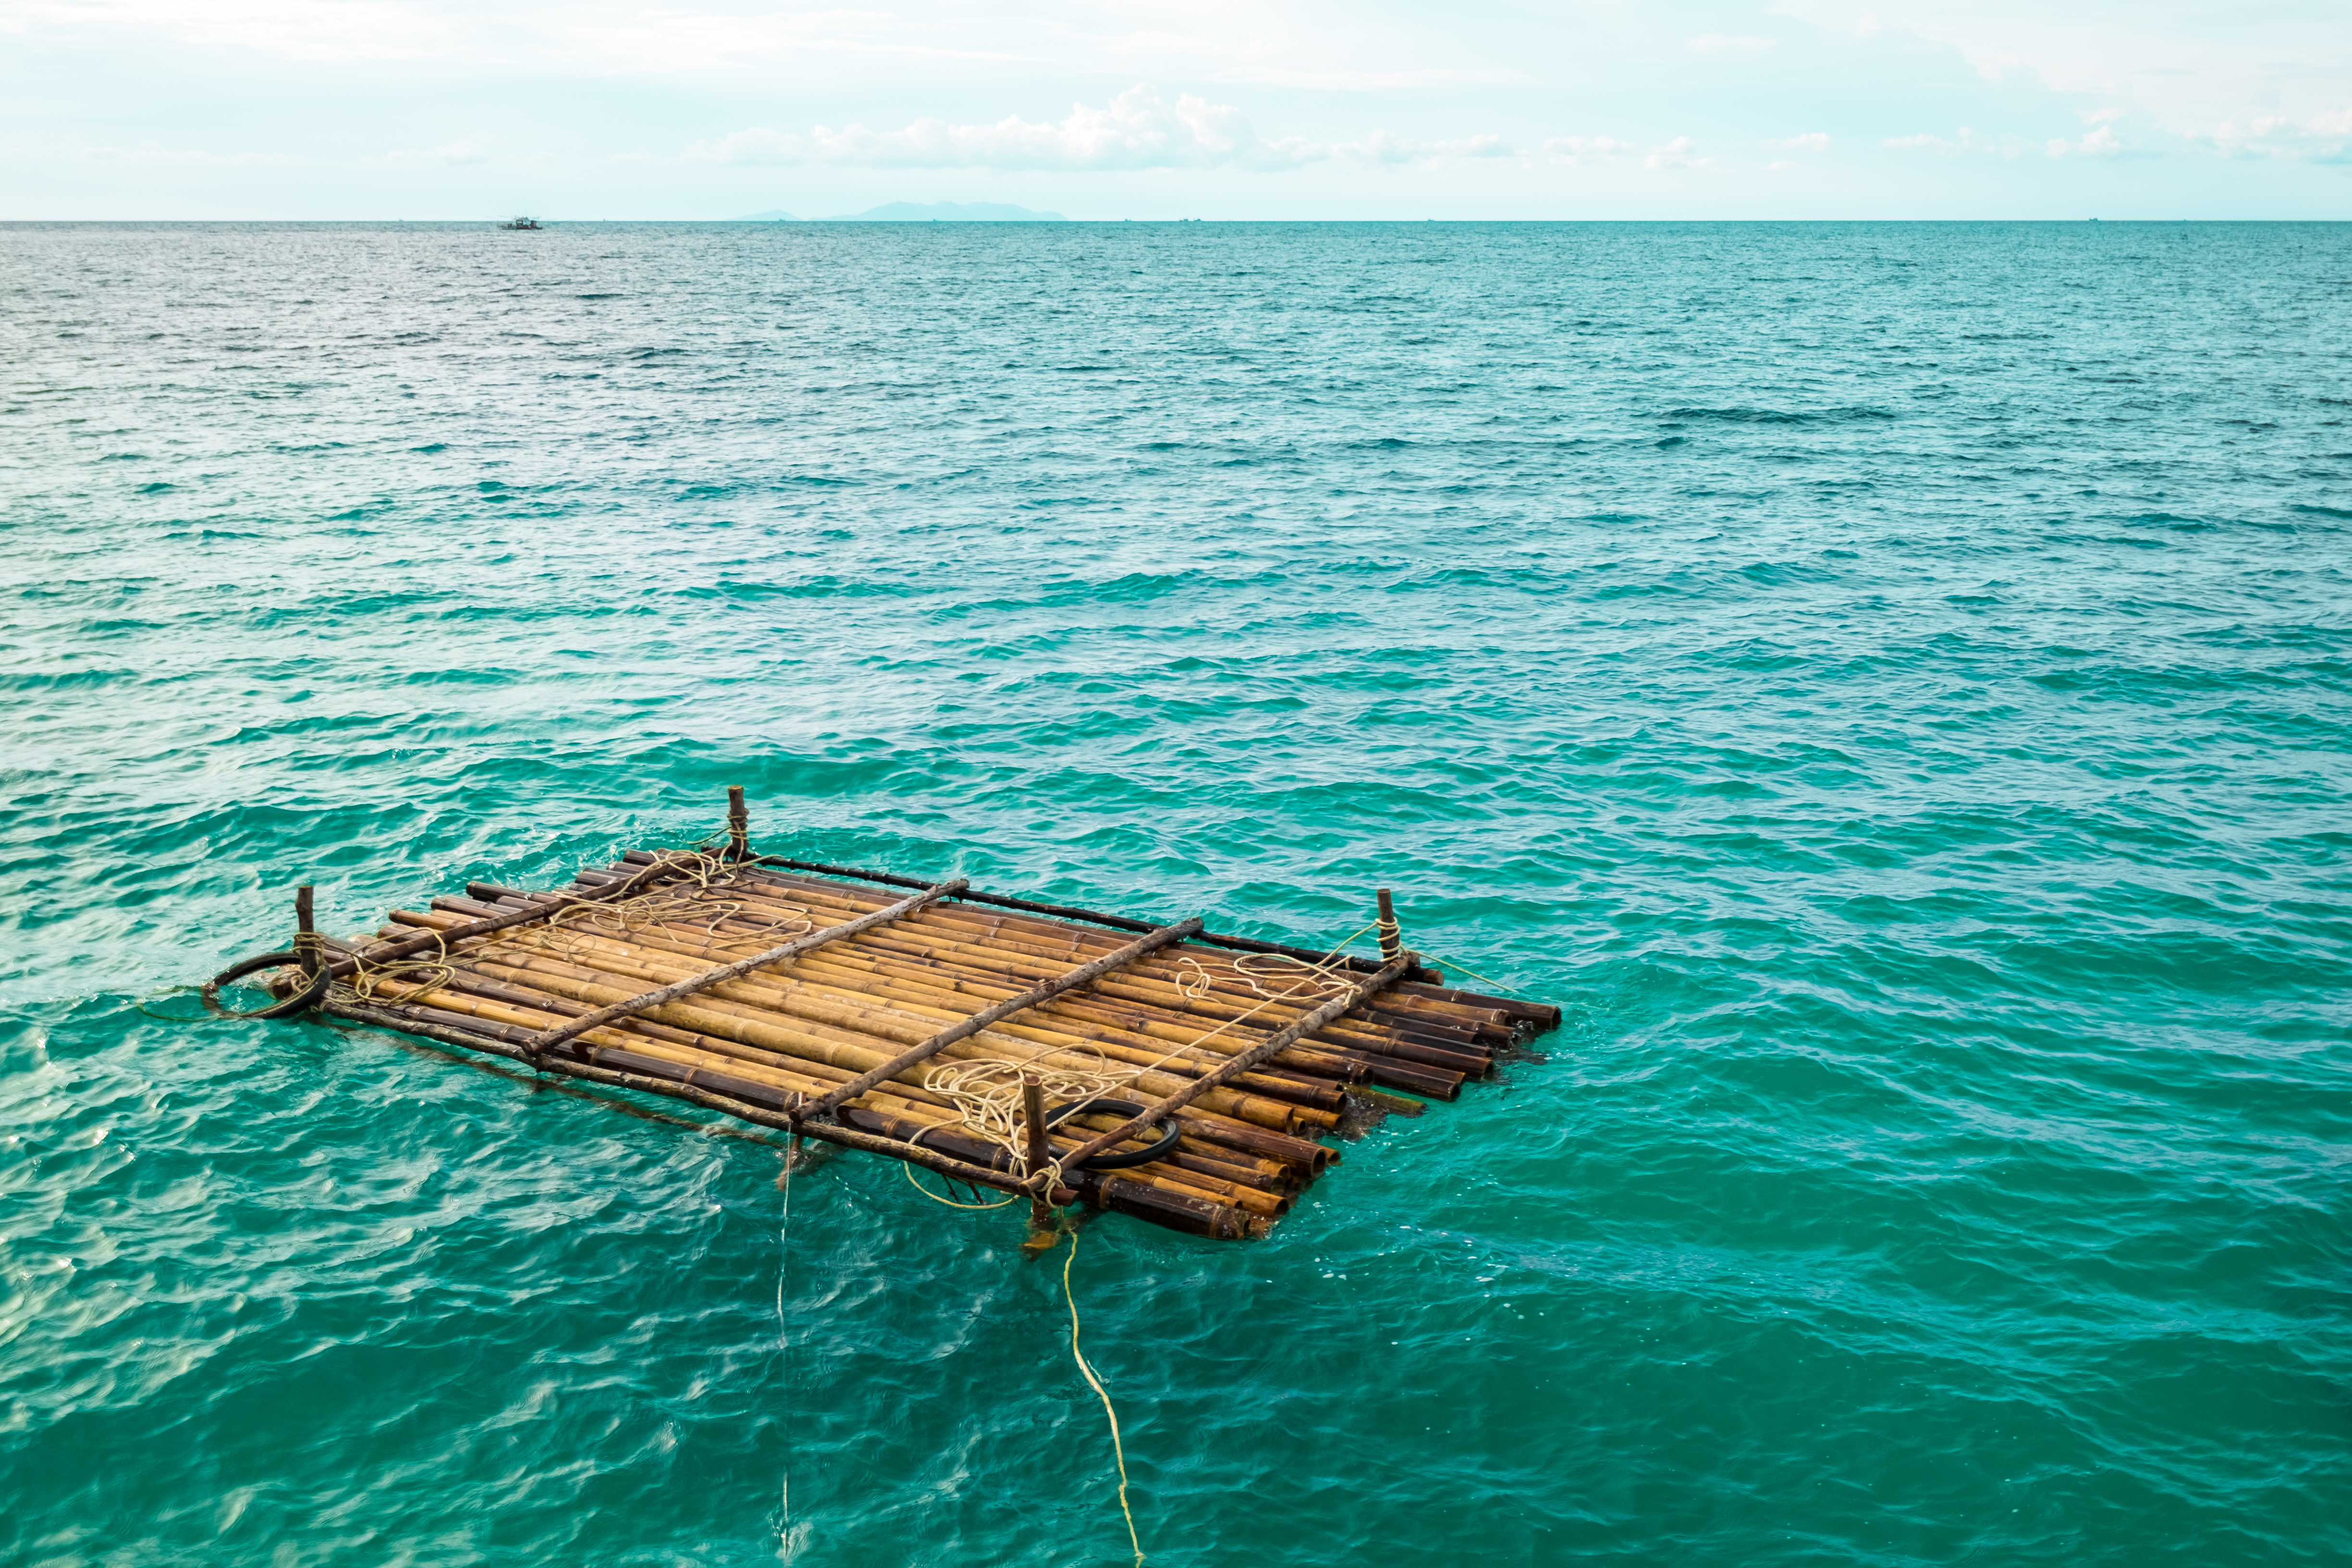 Wooden raft floating on water. | Source: Shutterstock